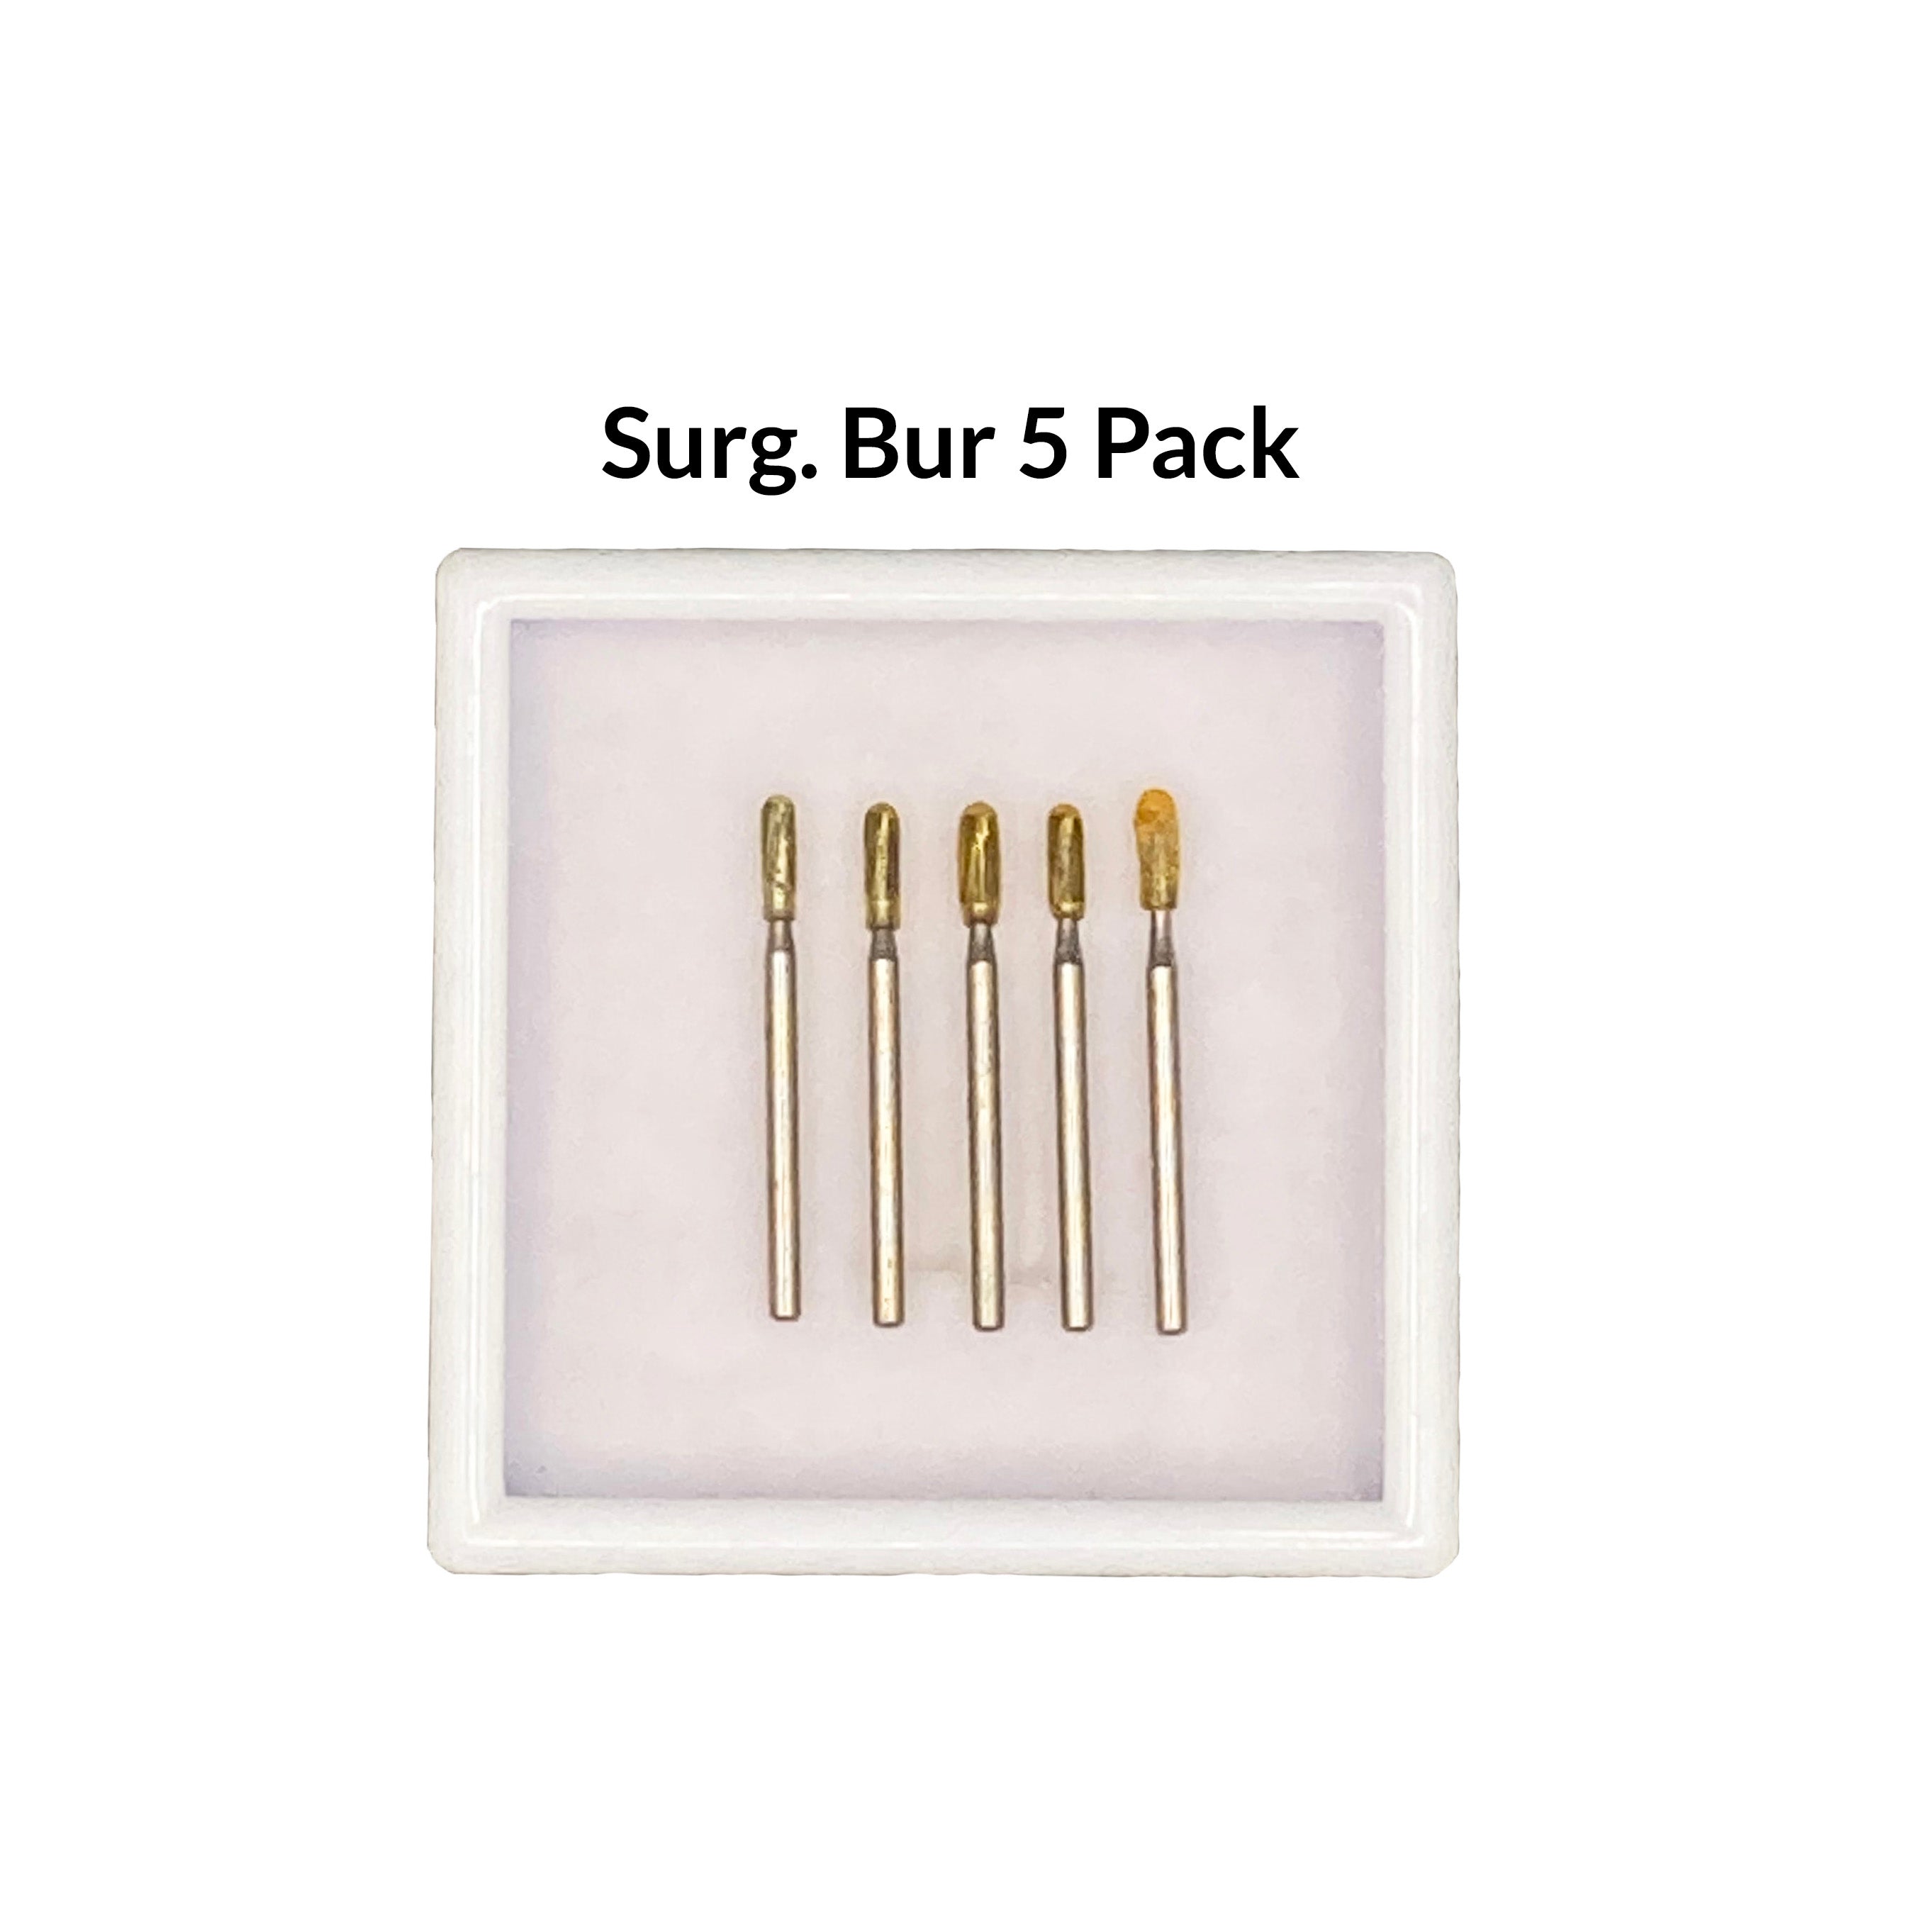 Surgical Burs